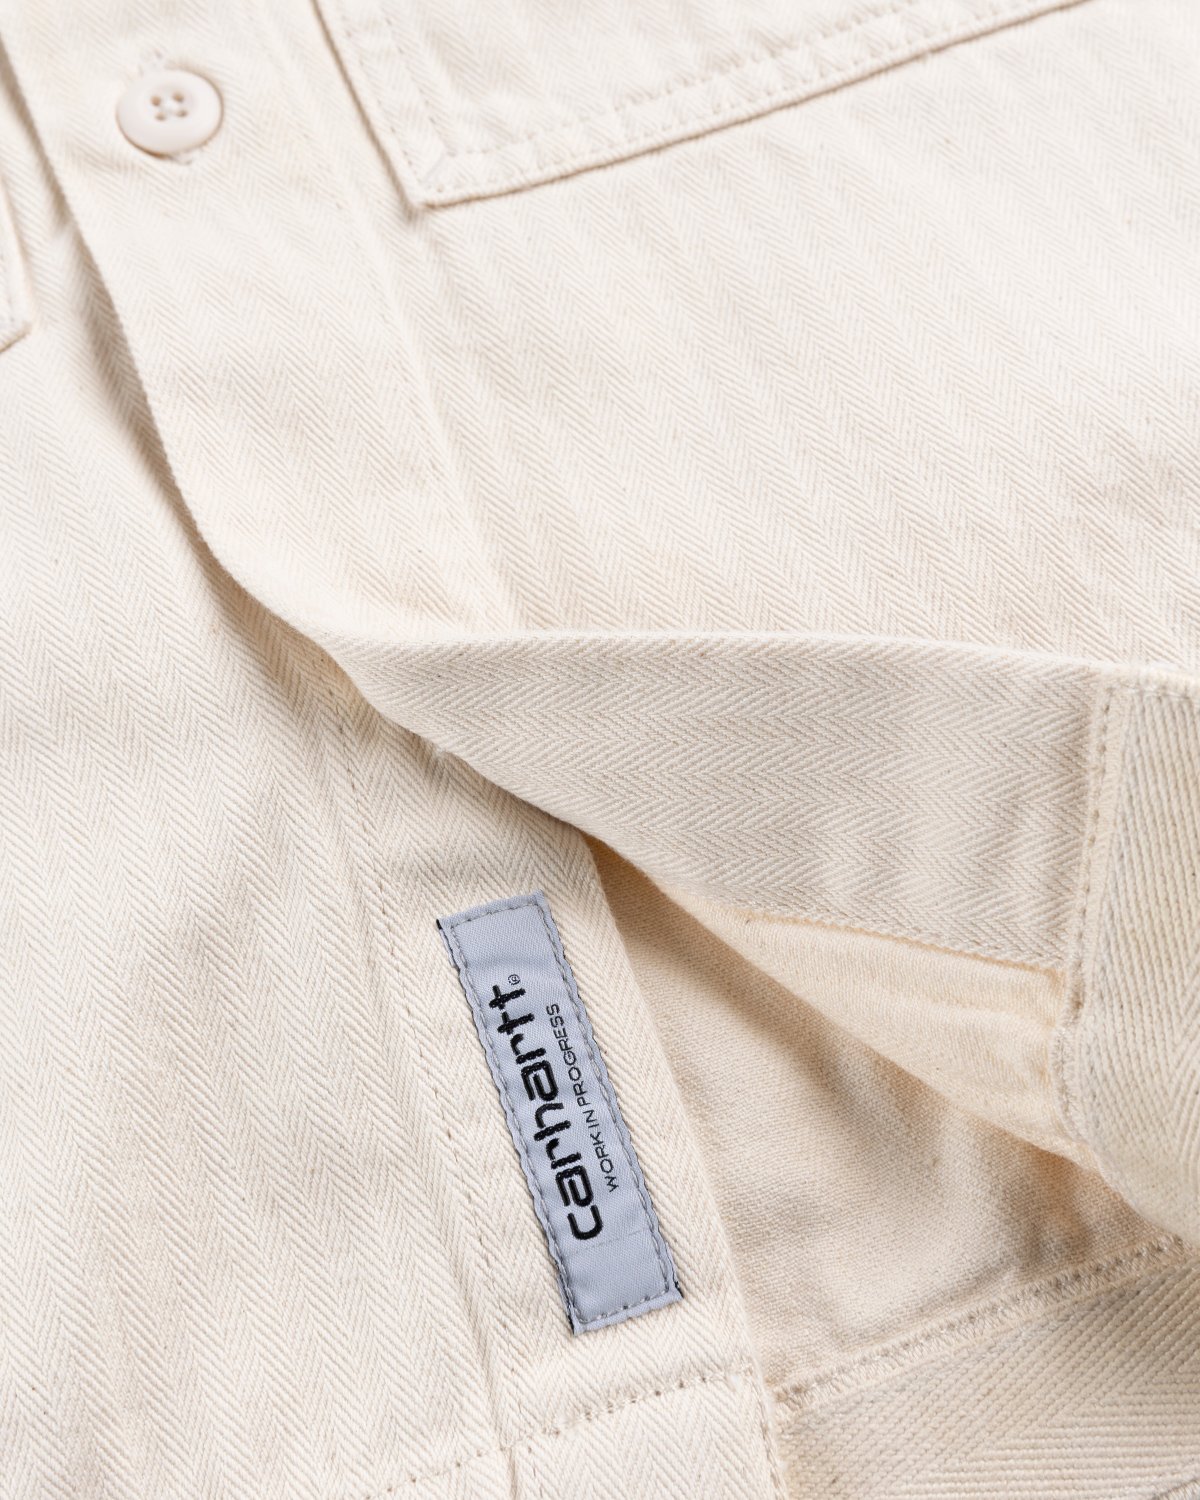 Carhartt WIP - Charter Shirt Natural - Clothing - Beige - Image 6